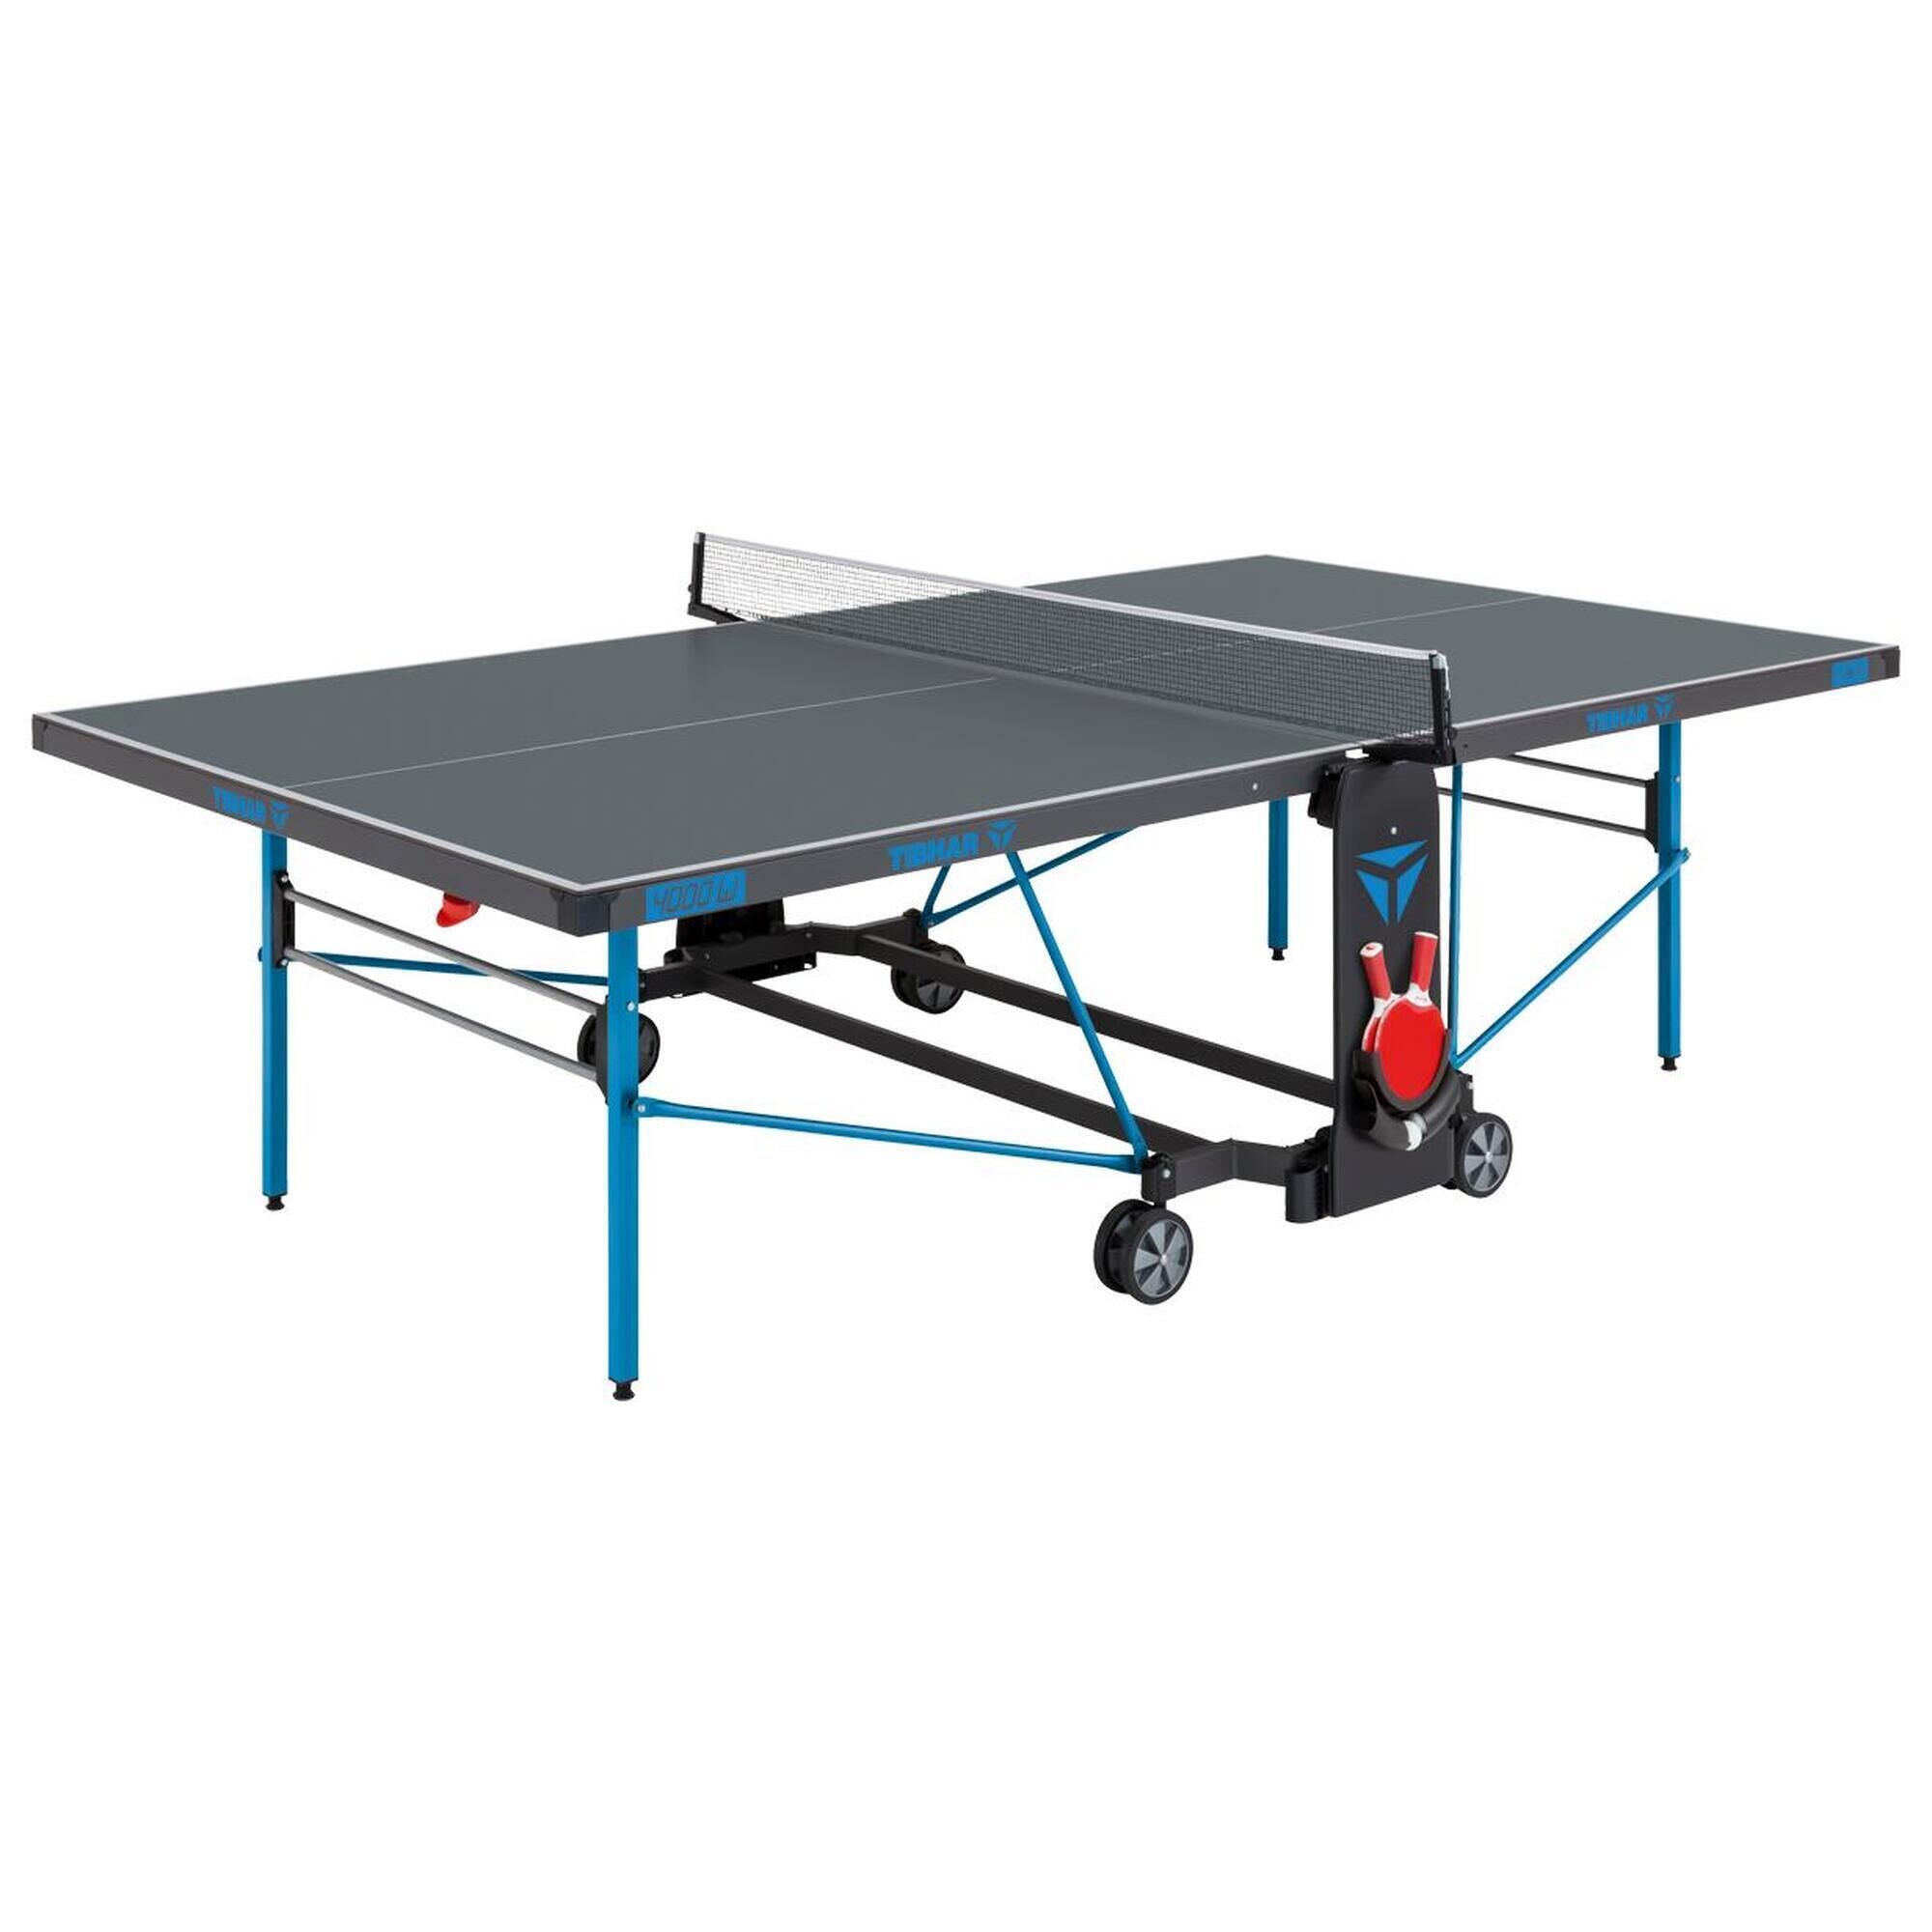 TIBHAR Tibhar 4000W Outdoor Table Tennis Table